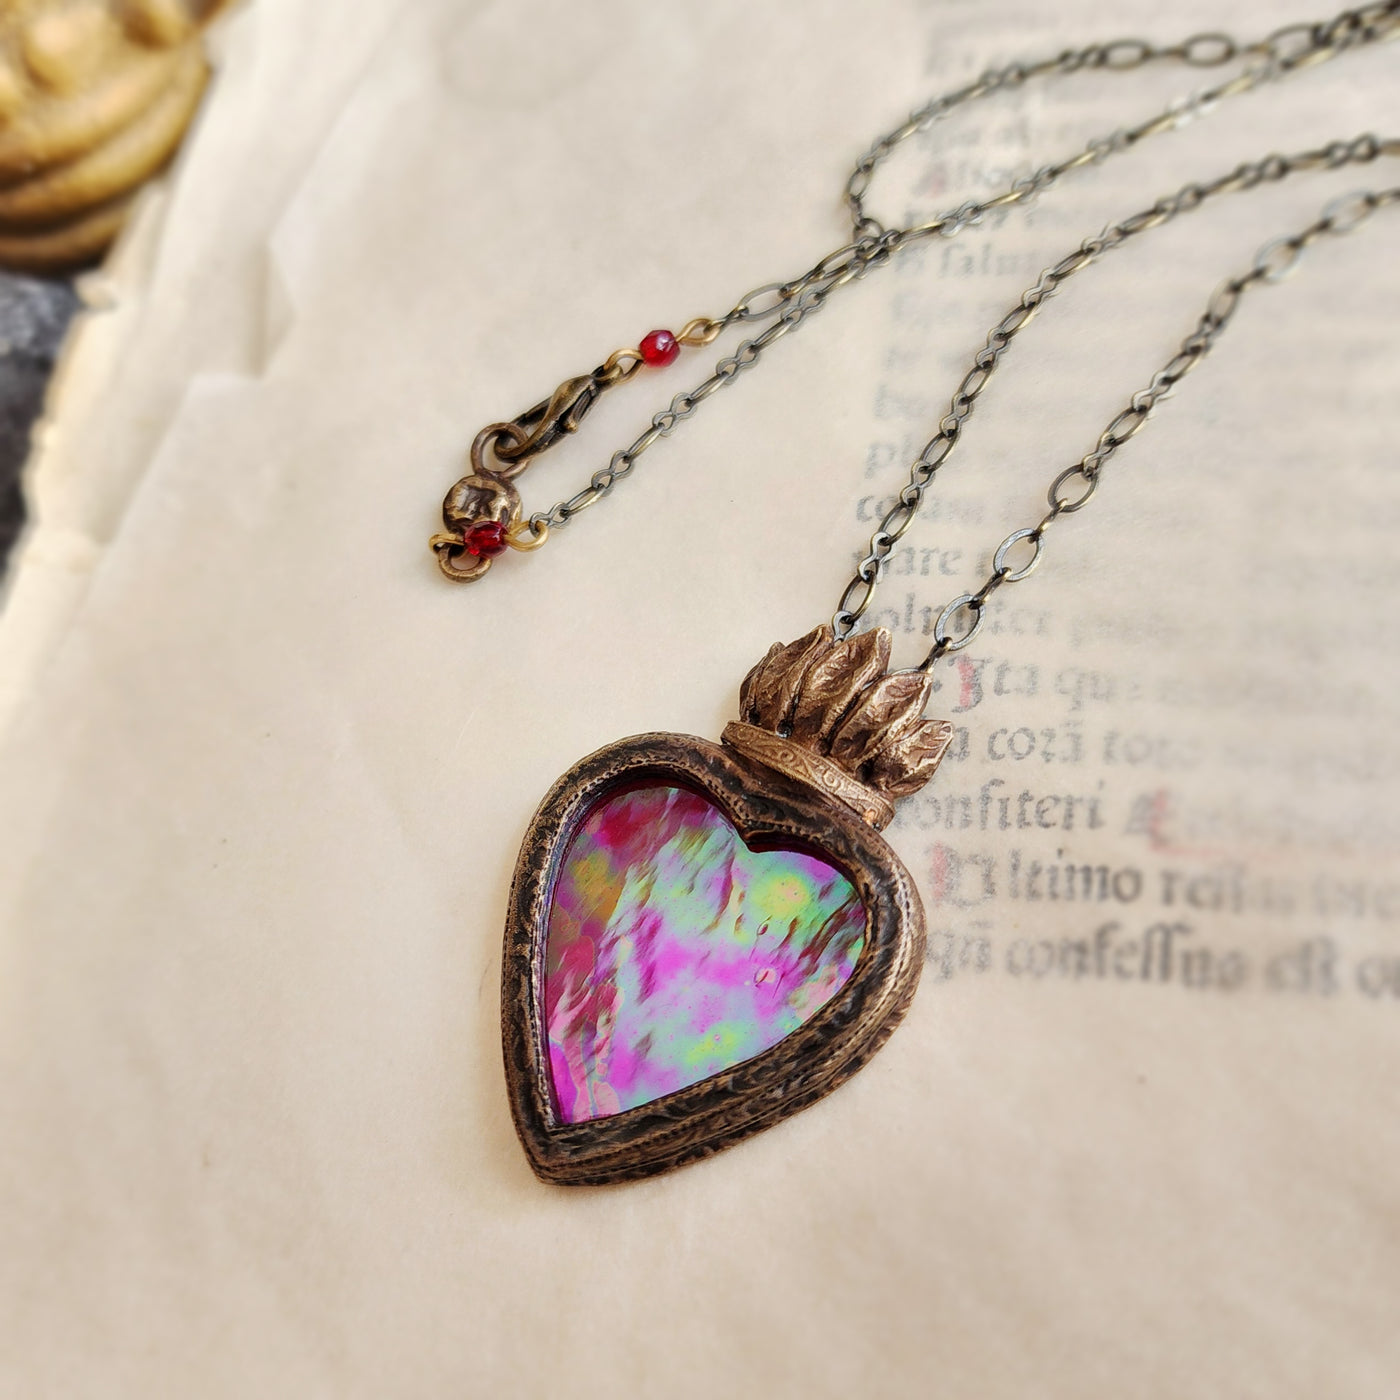 lux vivens - a sacred heart amulet